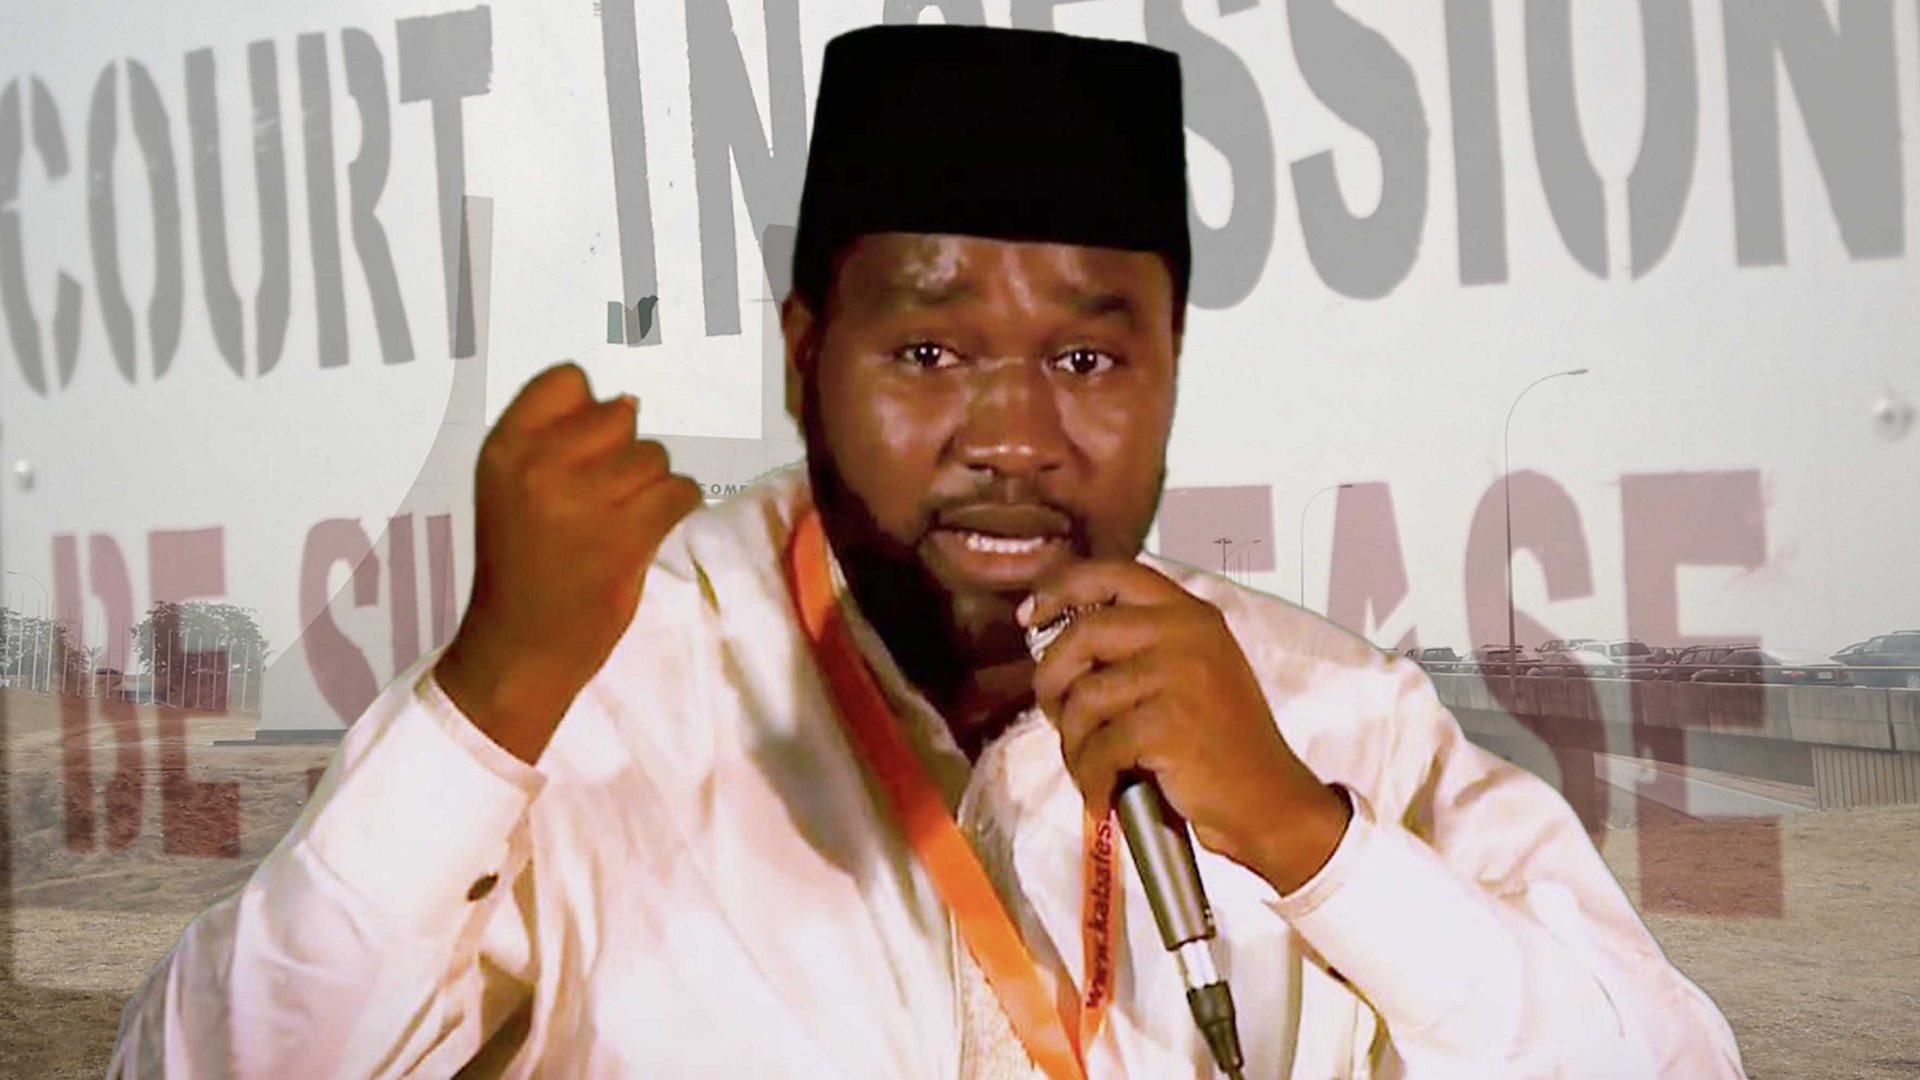 Nigerian atheist's 24-year blasphemy sentence reduced